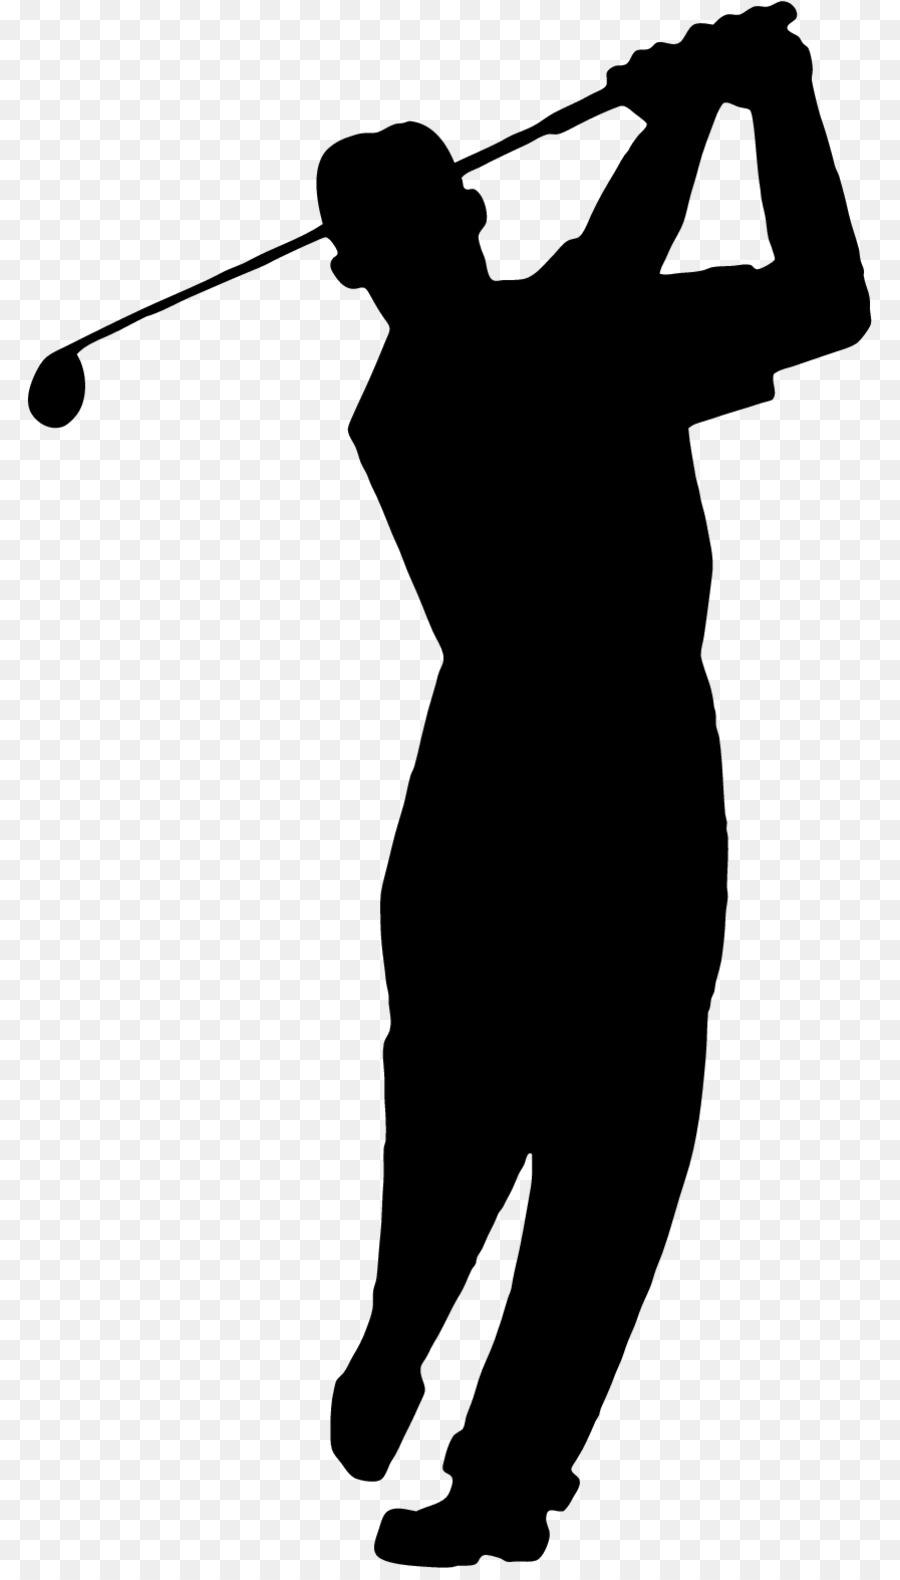 Golfer Golf Clubs Golf stroke mechanics Golf Balls - Golf png download - 850*1568 - Free Transparent Golf png Download.